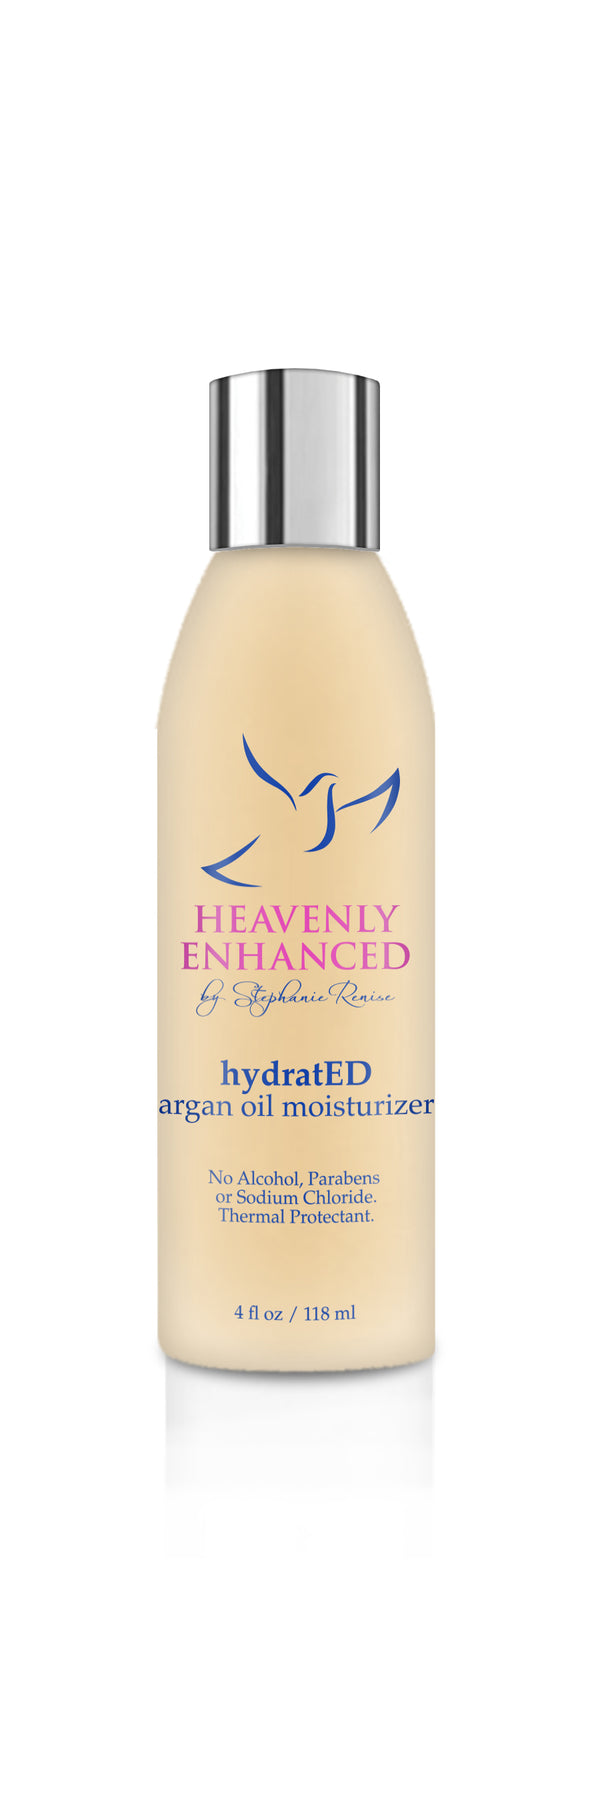 hydratED - argan oil moisturizing styling cream